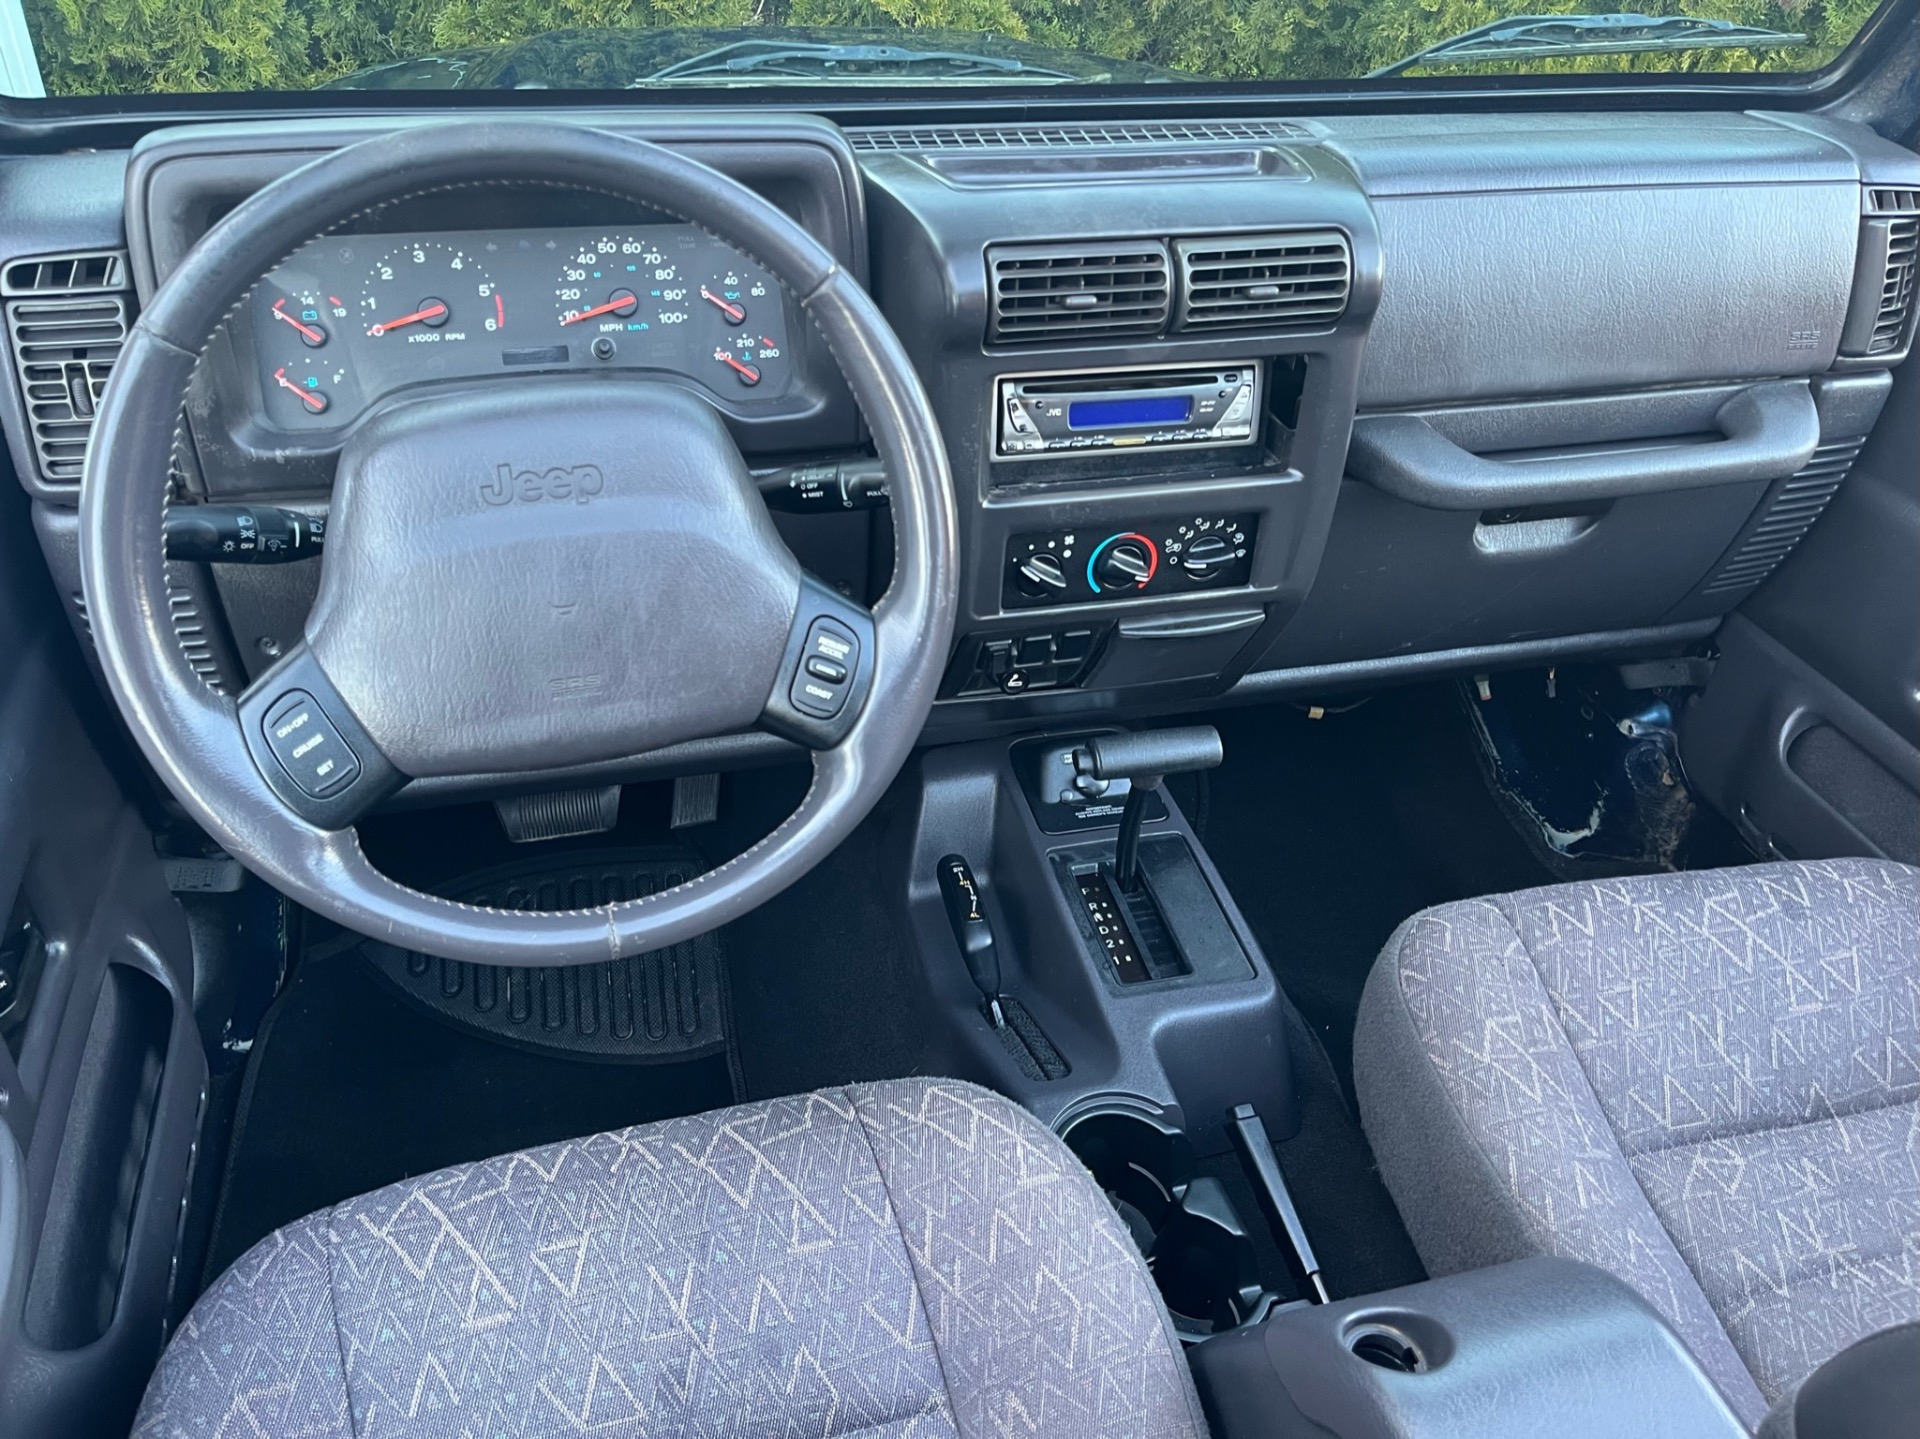 Used-2001-Jeep-Wrangler-Sport-Automatic-TJ